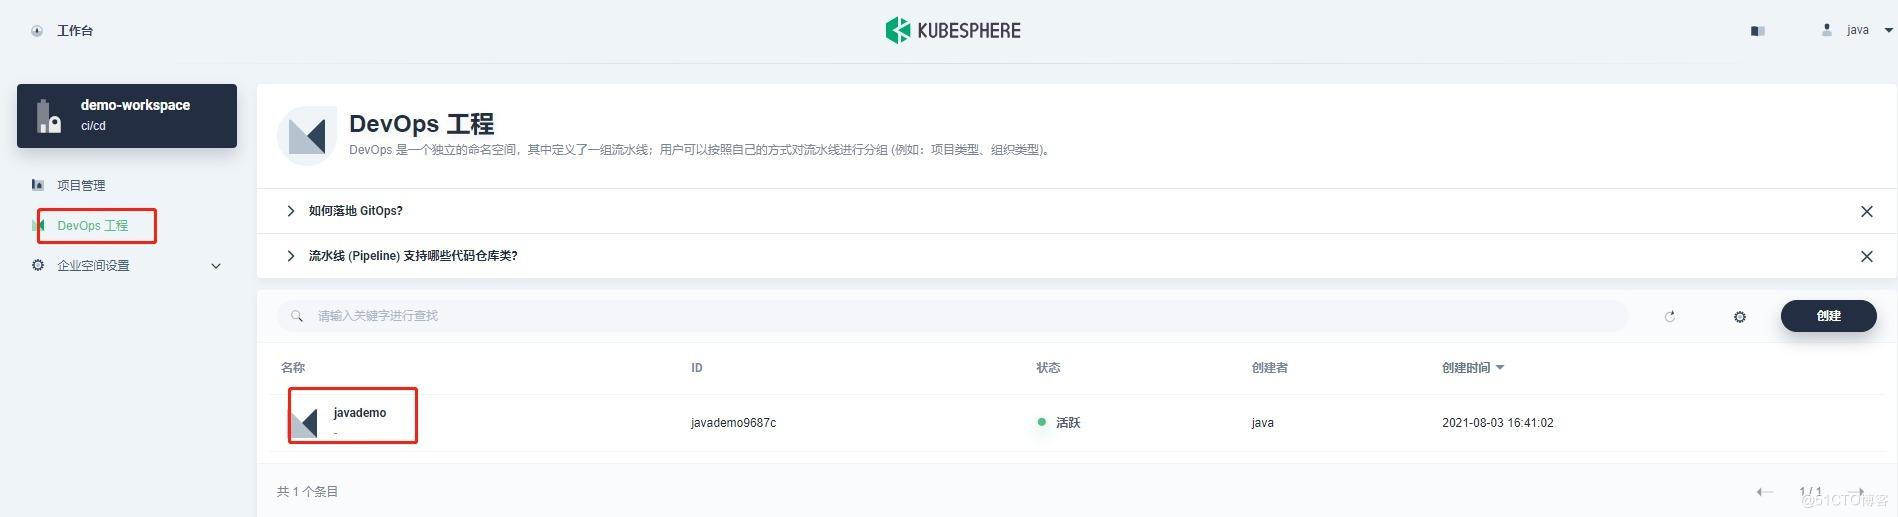 使用 KubeSphere 创建DevOps工程